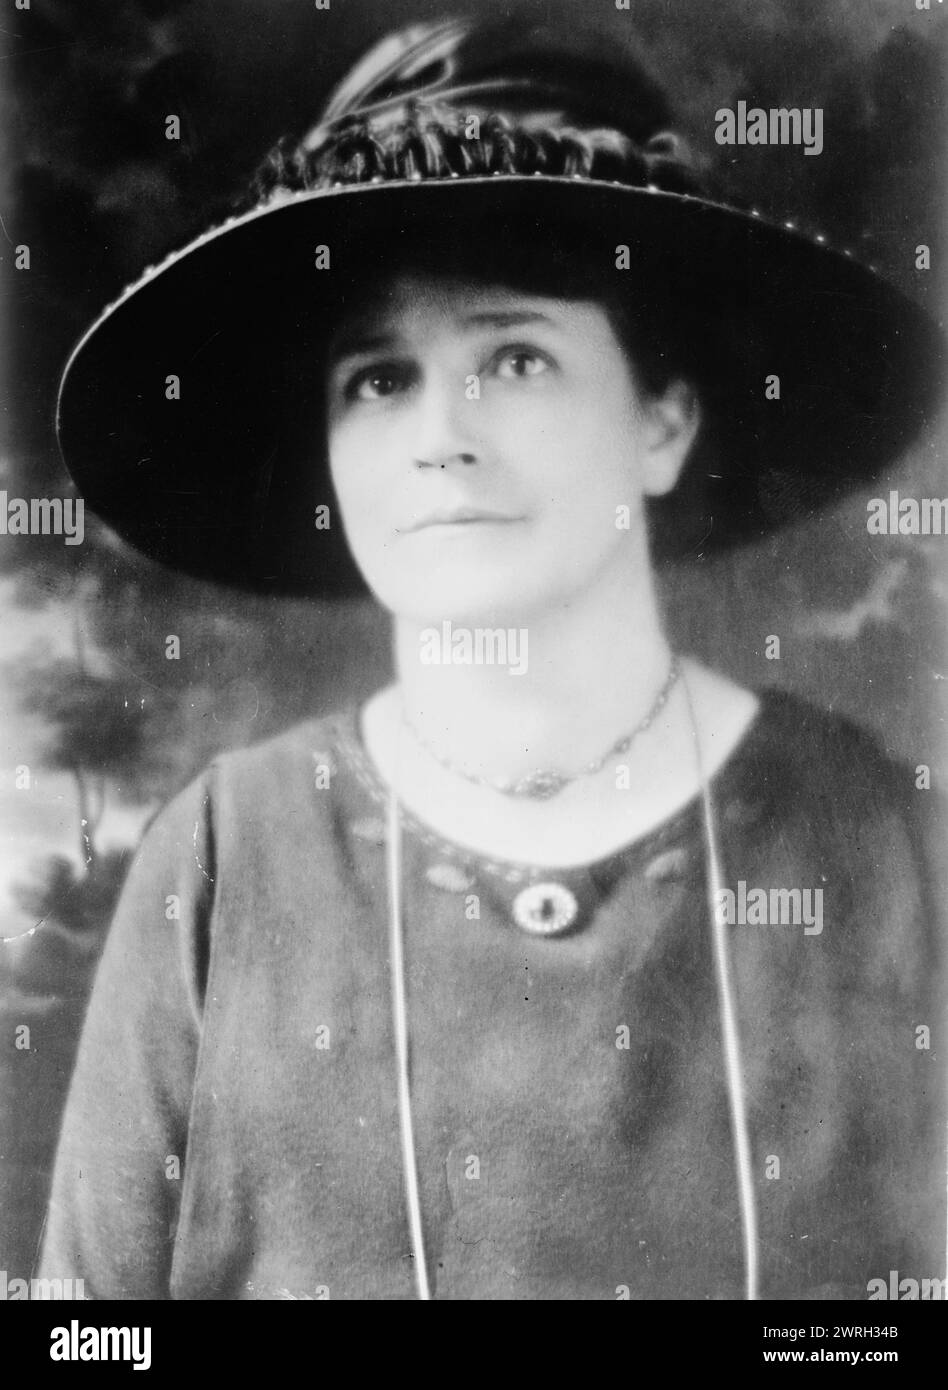 Signora Jas. Lees Laidlaw, tra c1915 e c1920. Mostra Harriet Burton Laidlaw (1873-1949) una suffragista e riformatrice che era sposata con James Lees Laidlaw. Foto Stock